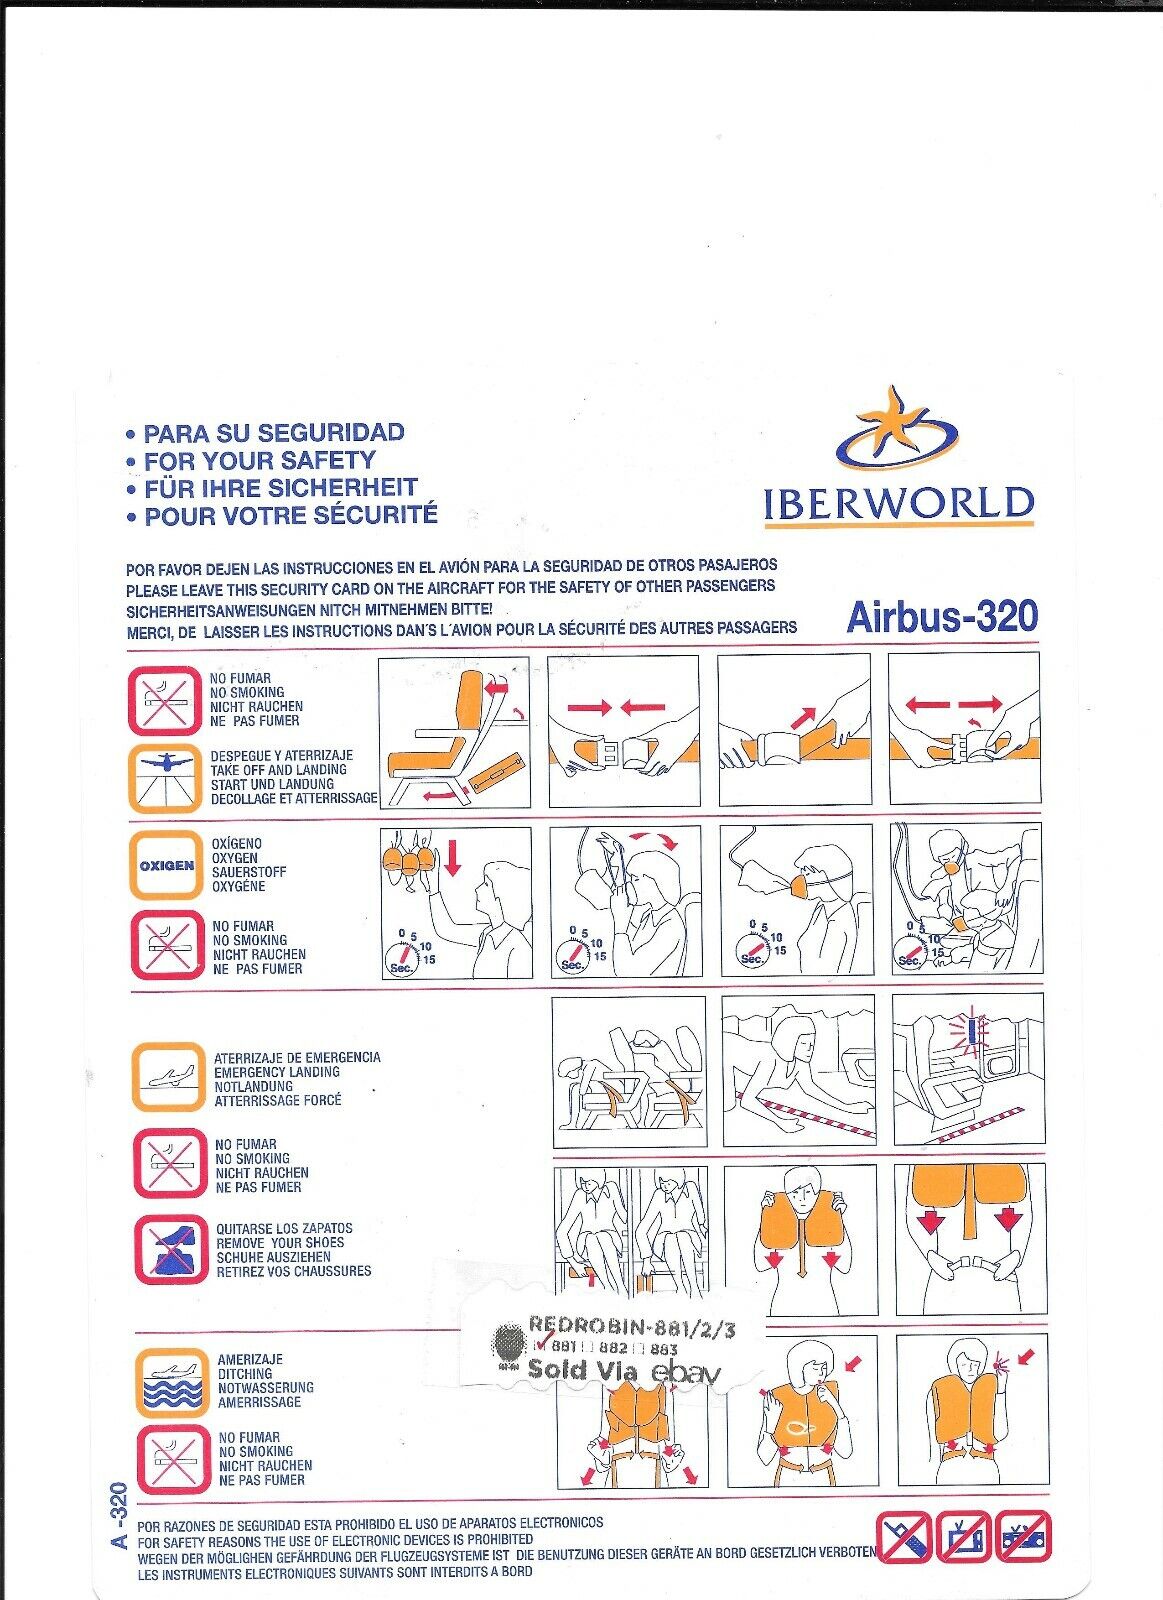 Iberworld Airbus A320 Safety Card